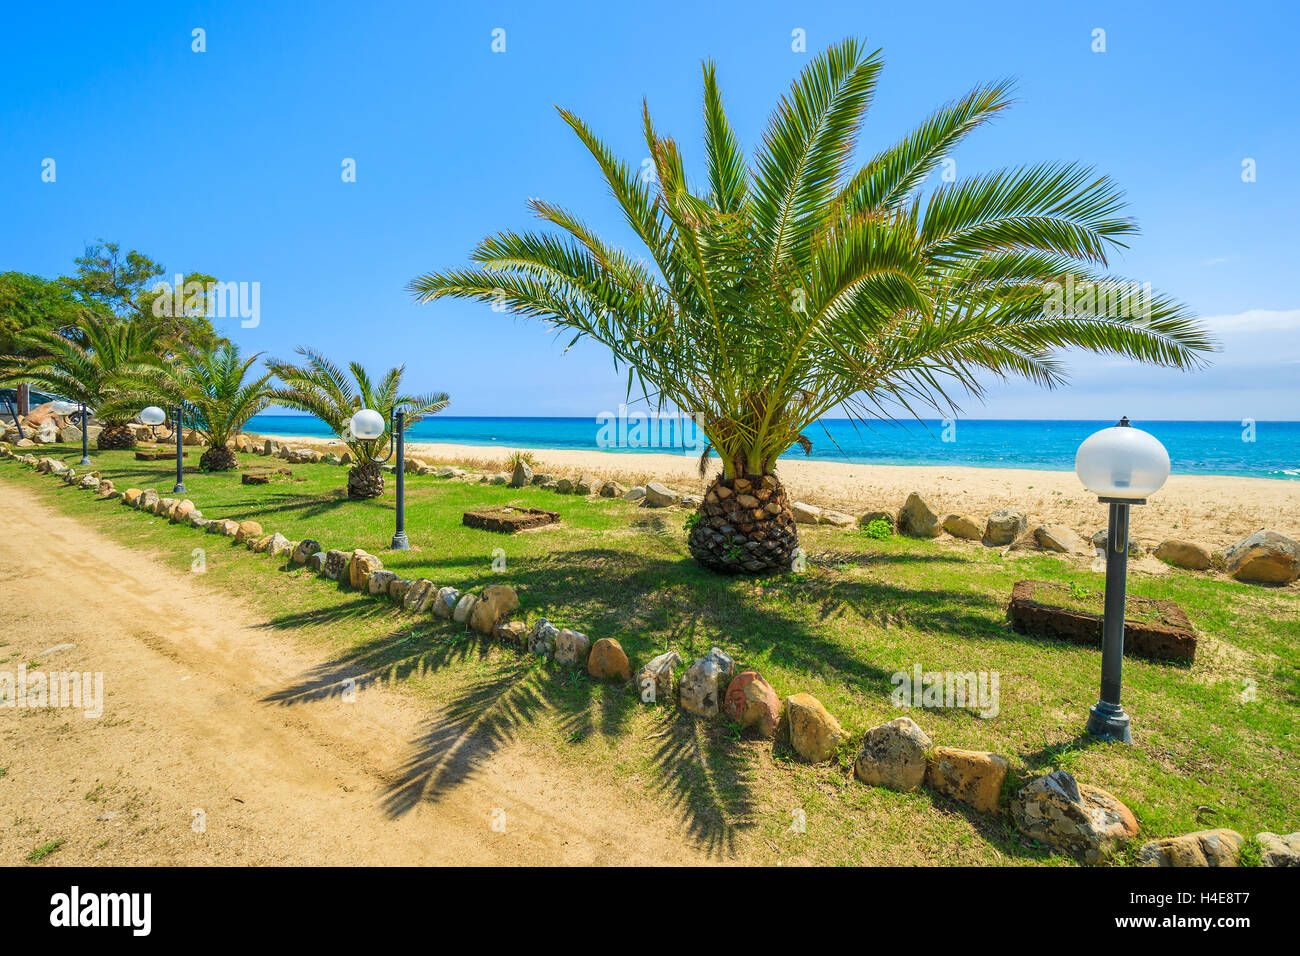 Coastal promenade with palm trees along a beach, Cala Sinzias, Sardinia island, Italy Stock Photo